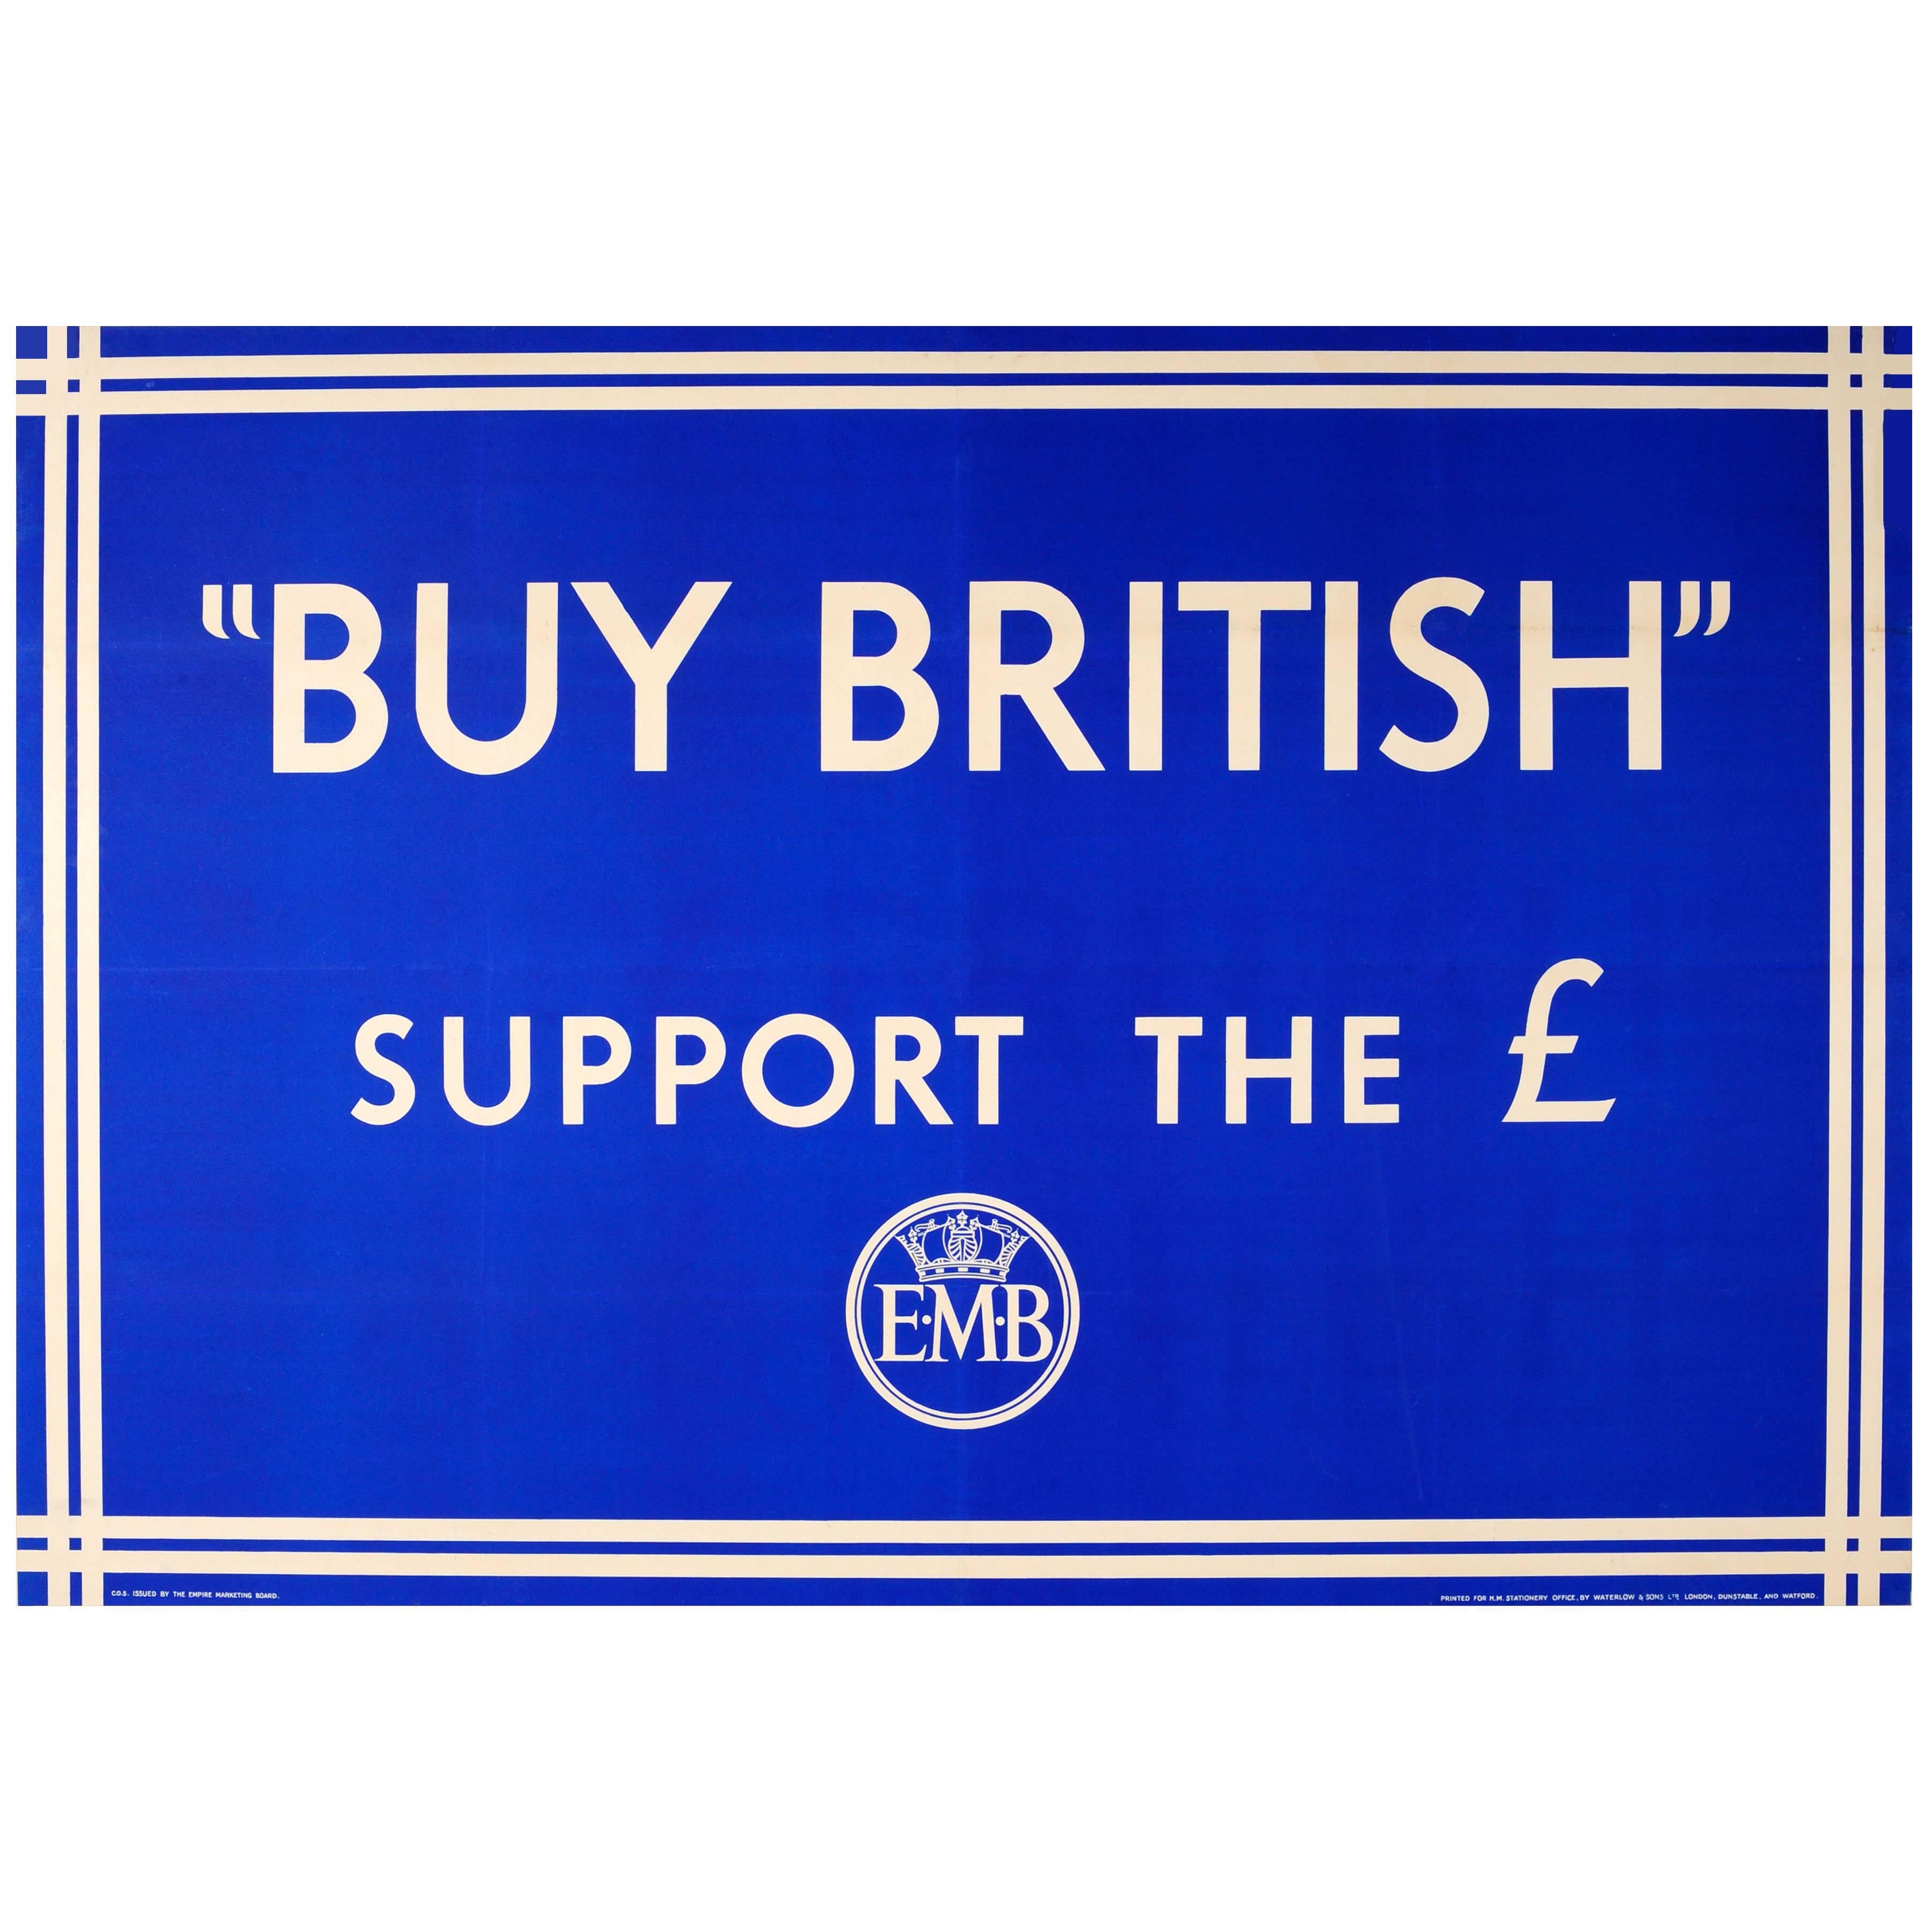 Original Vintage Empire Marketing Board Poster - Buy British Support The £ Pound